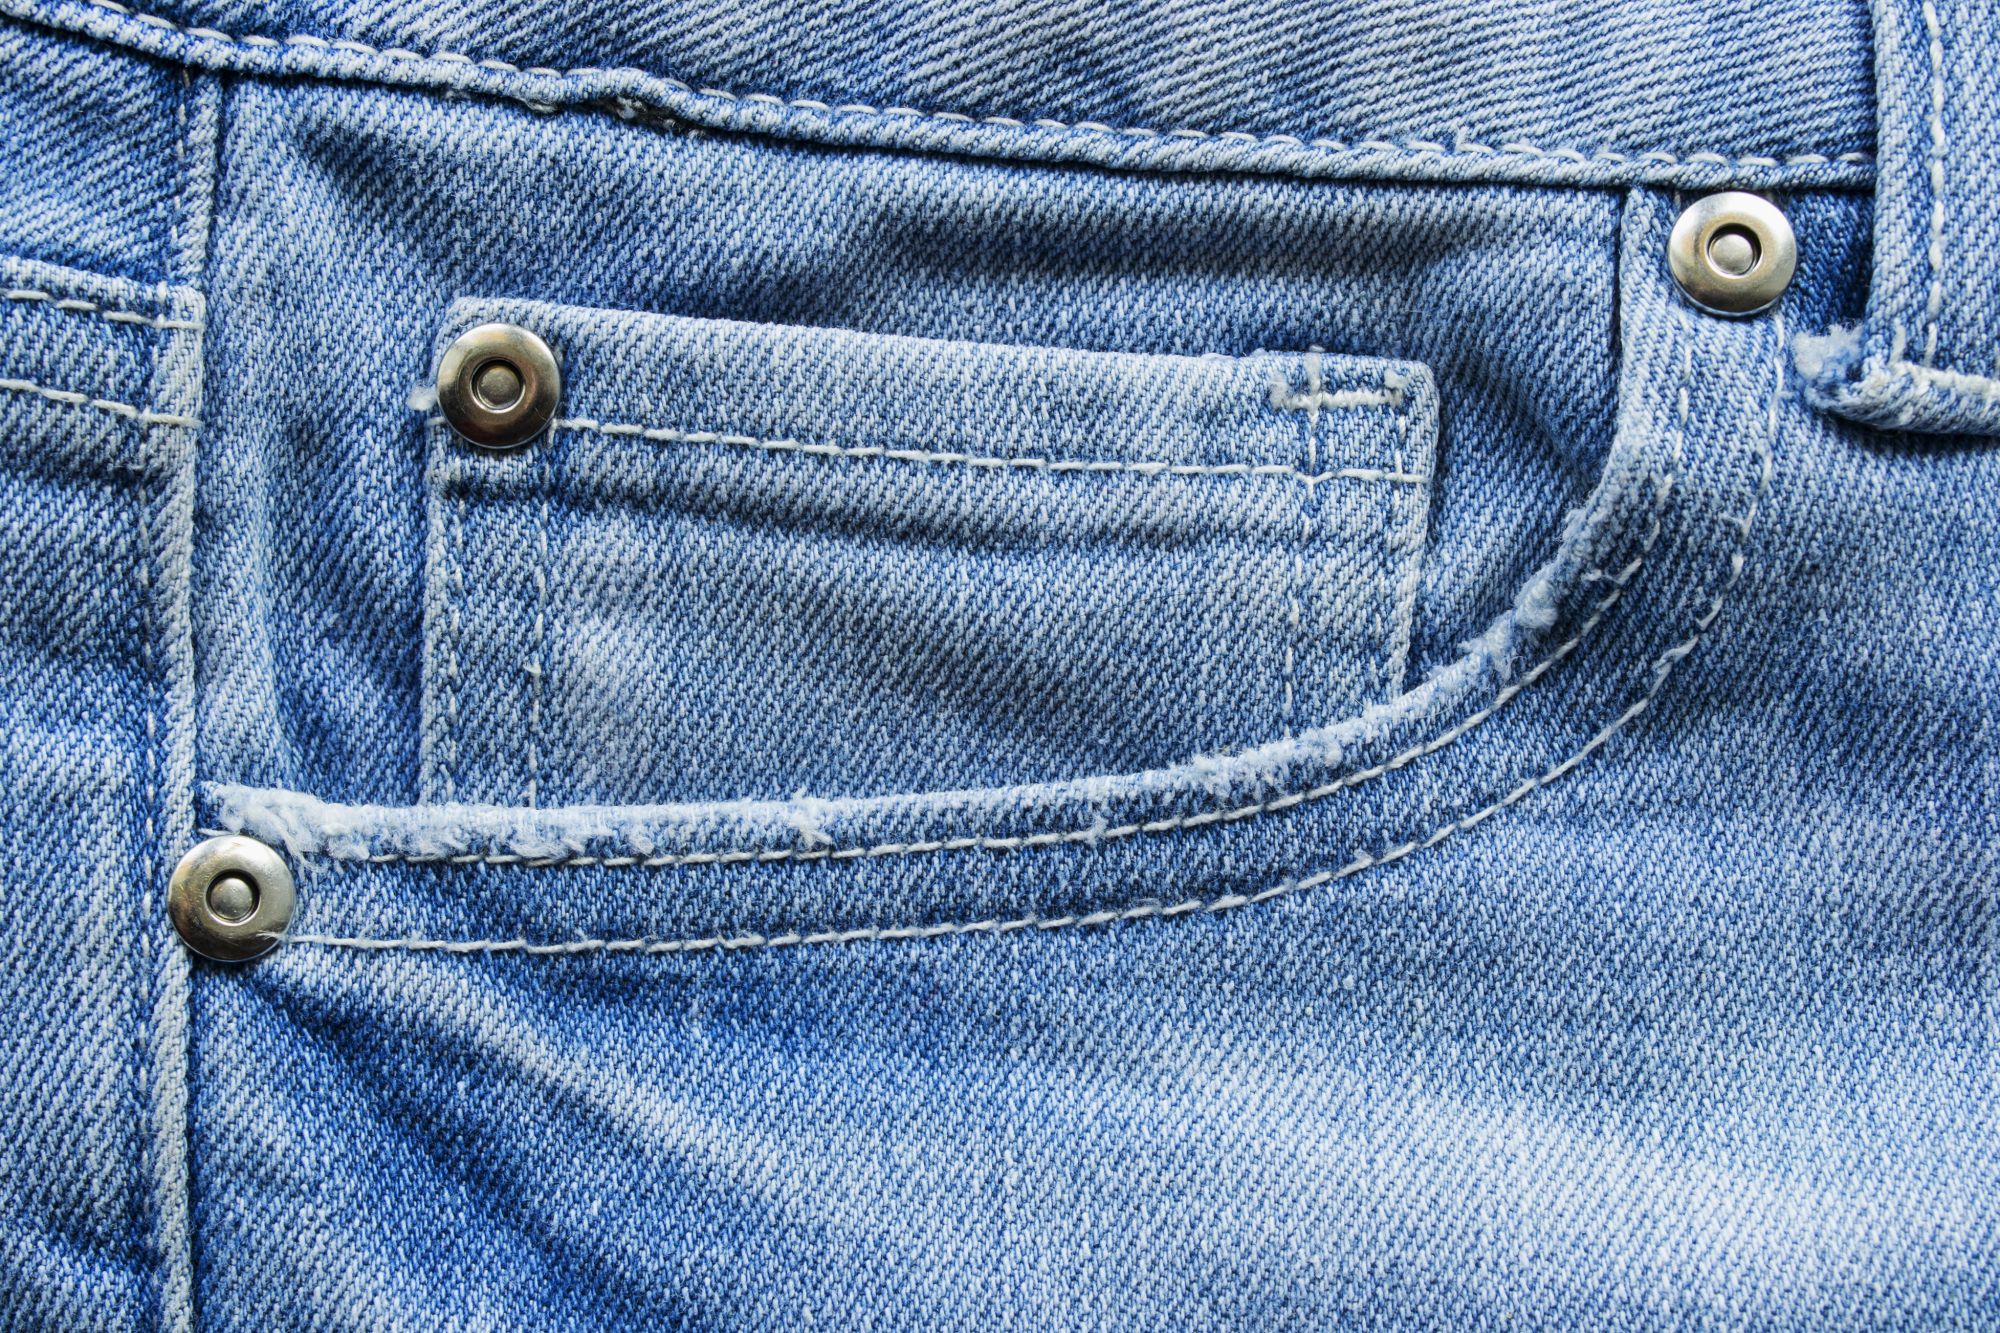 jeans detail